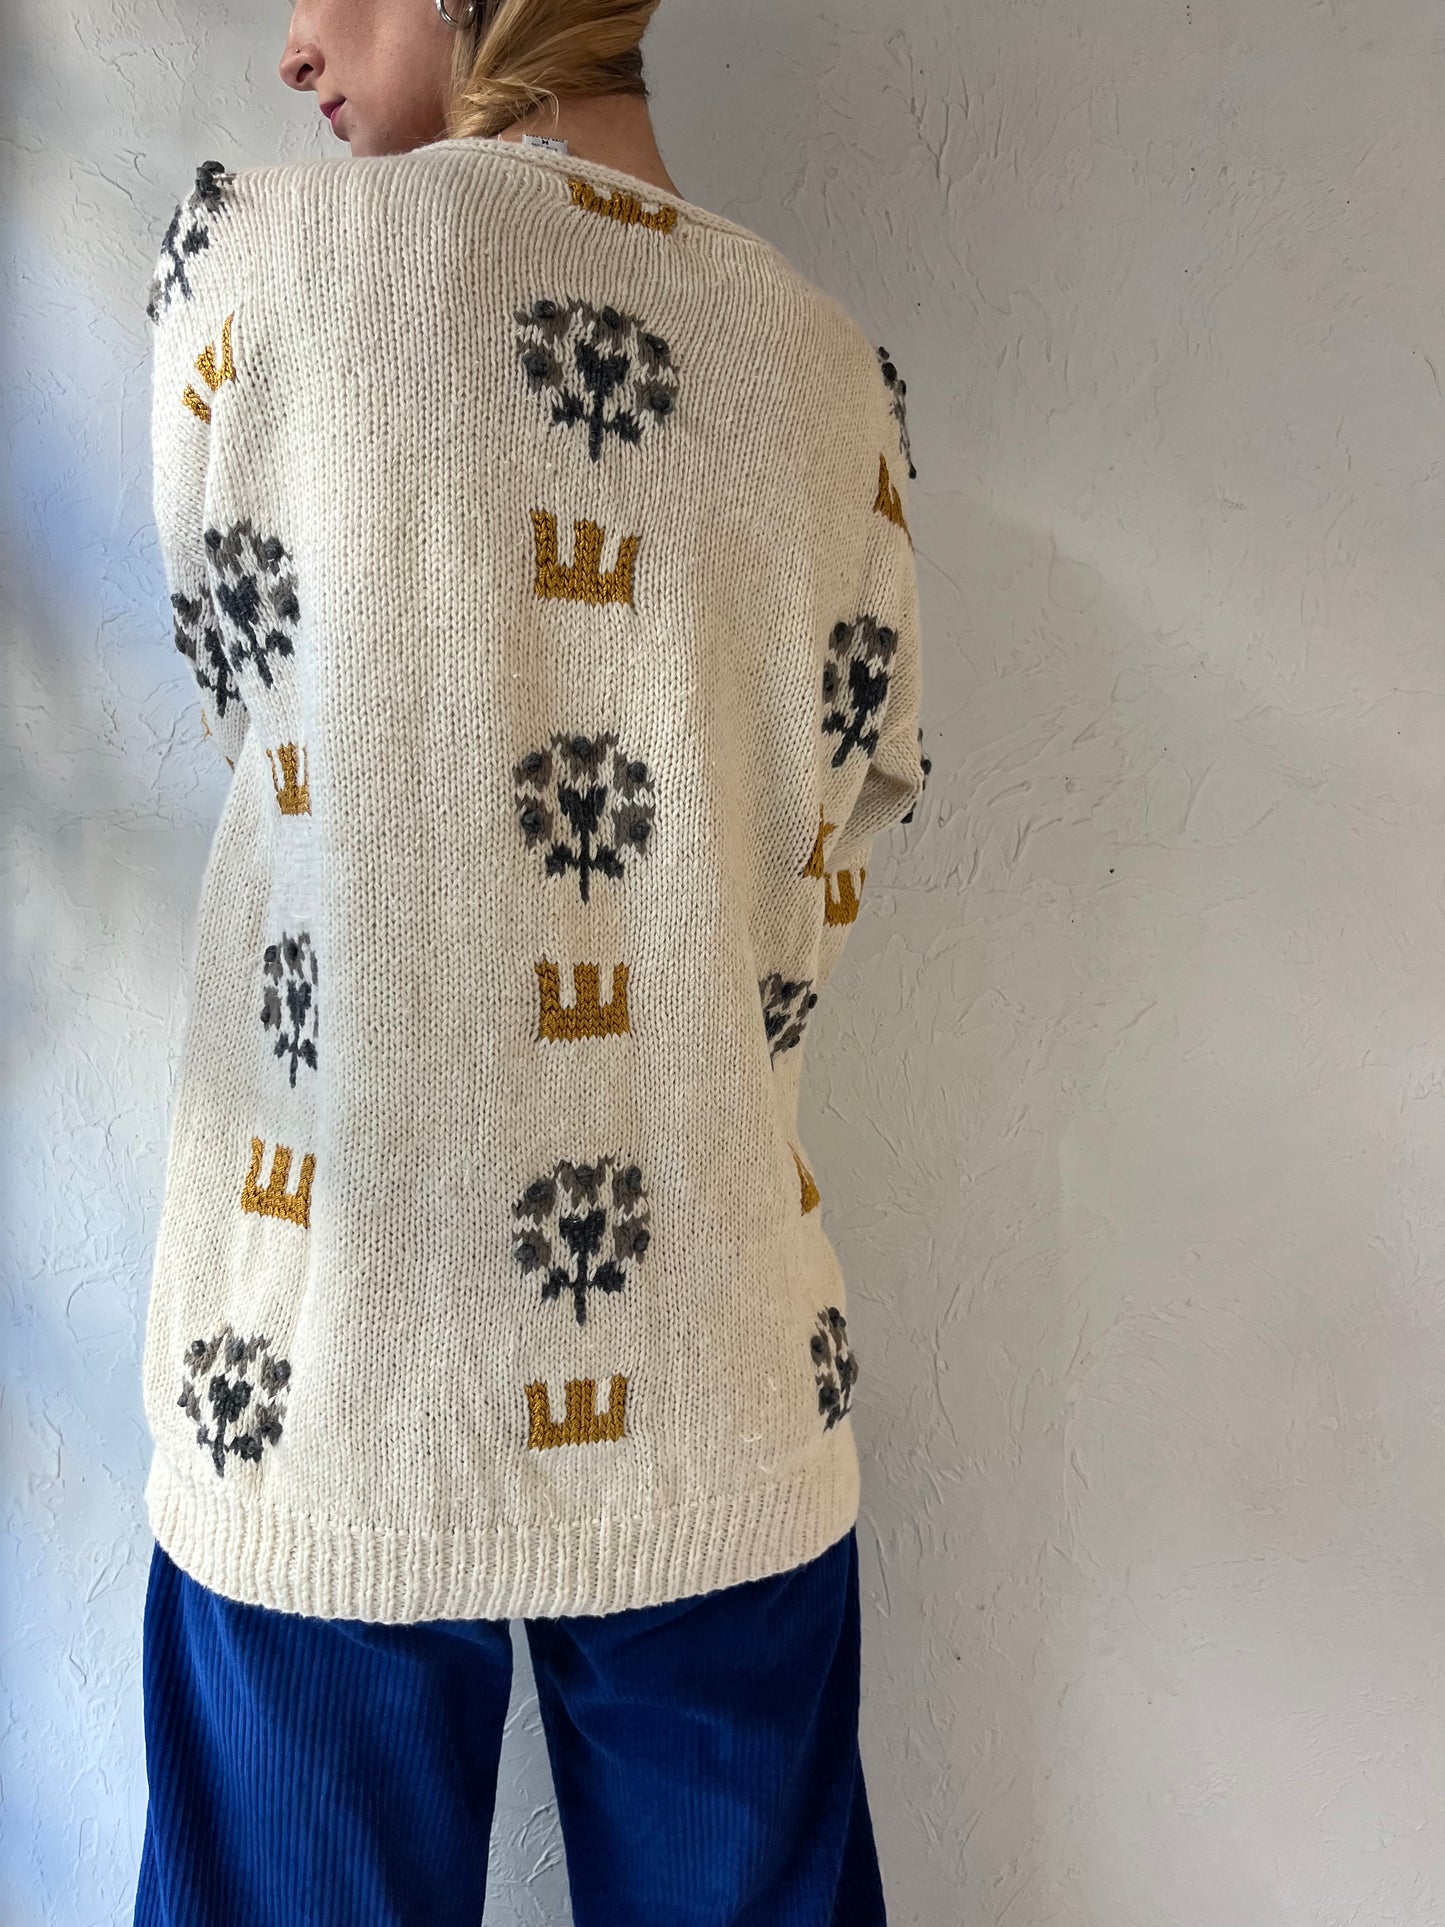 90s 'Express' Floral Knit V Neck Sweater / Medium